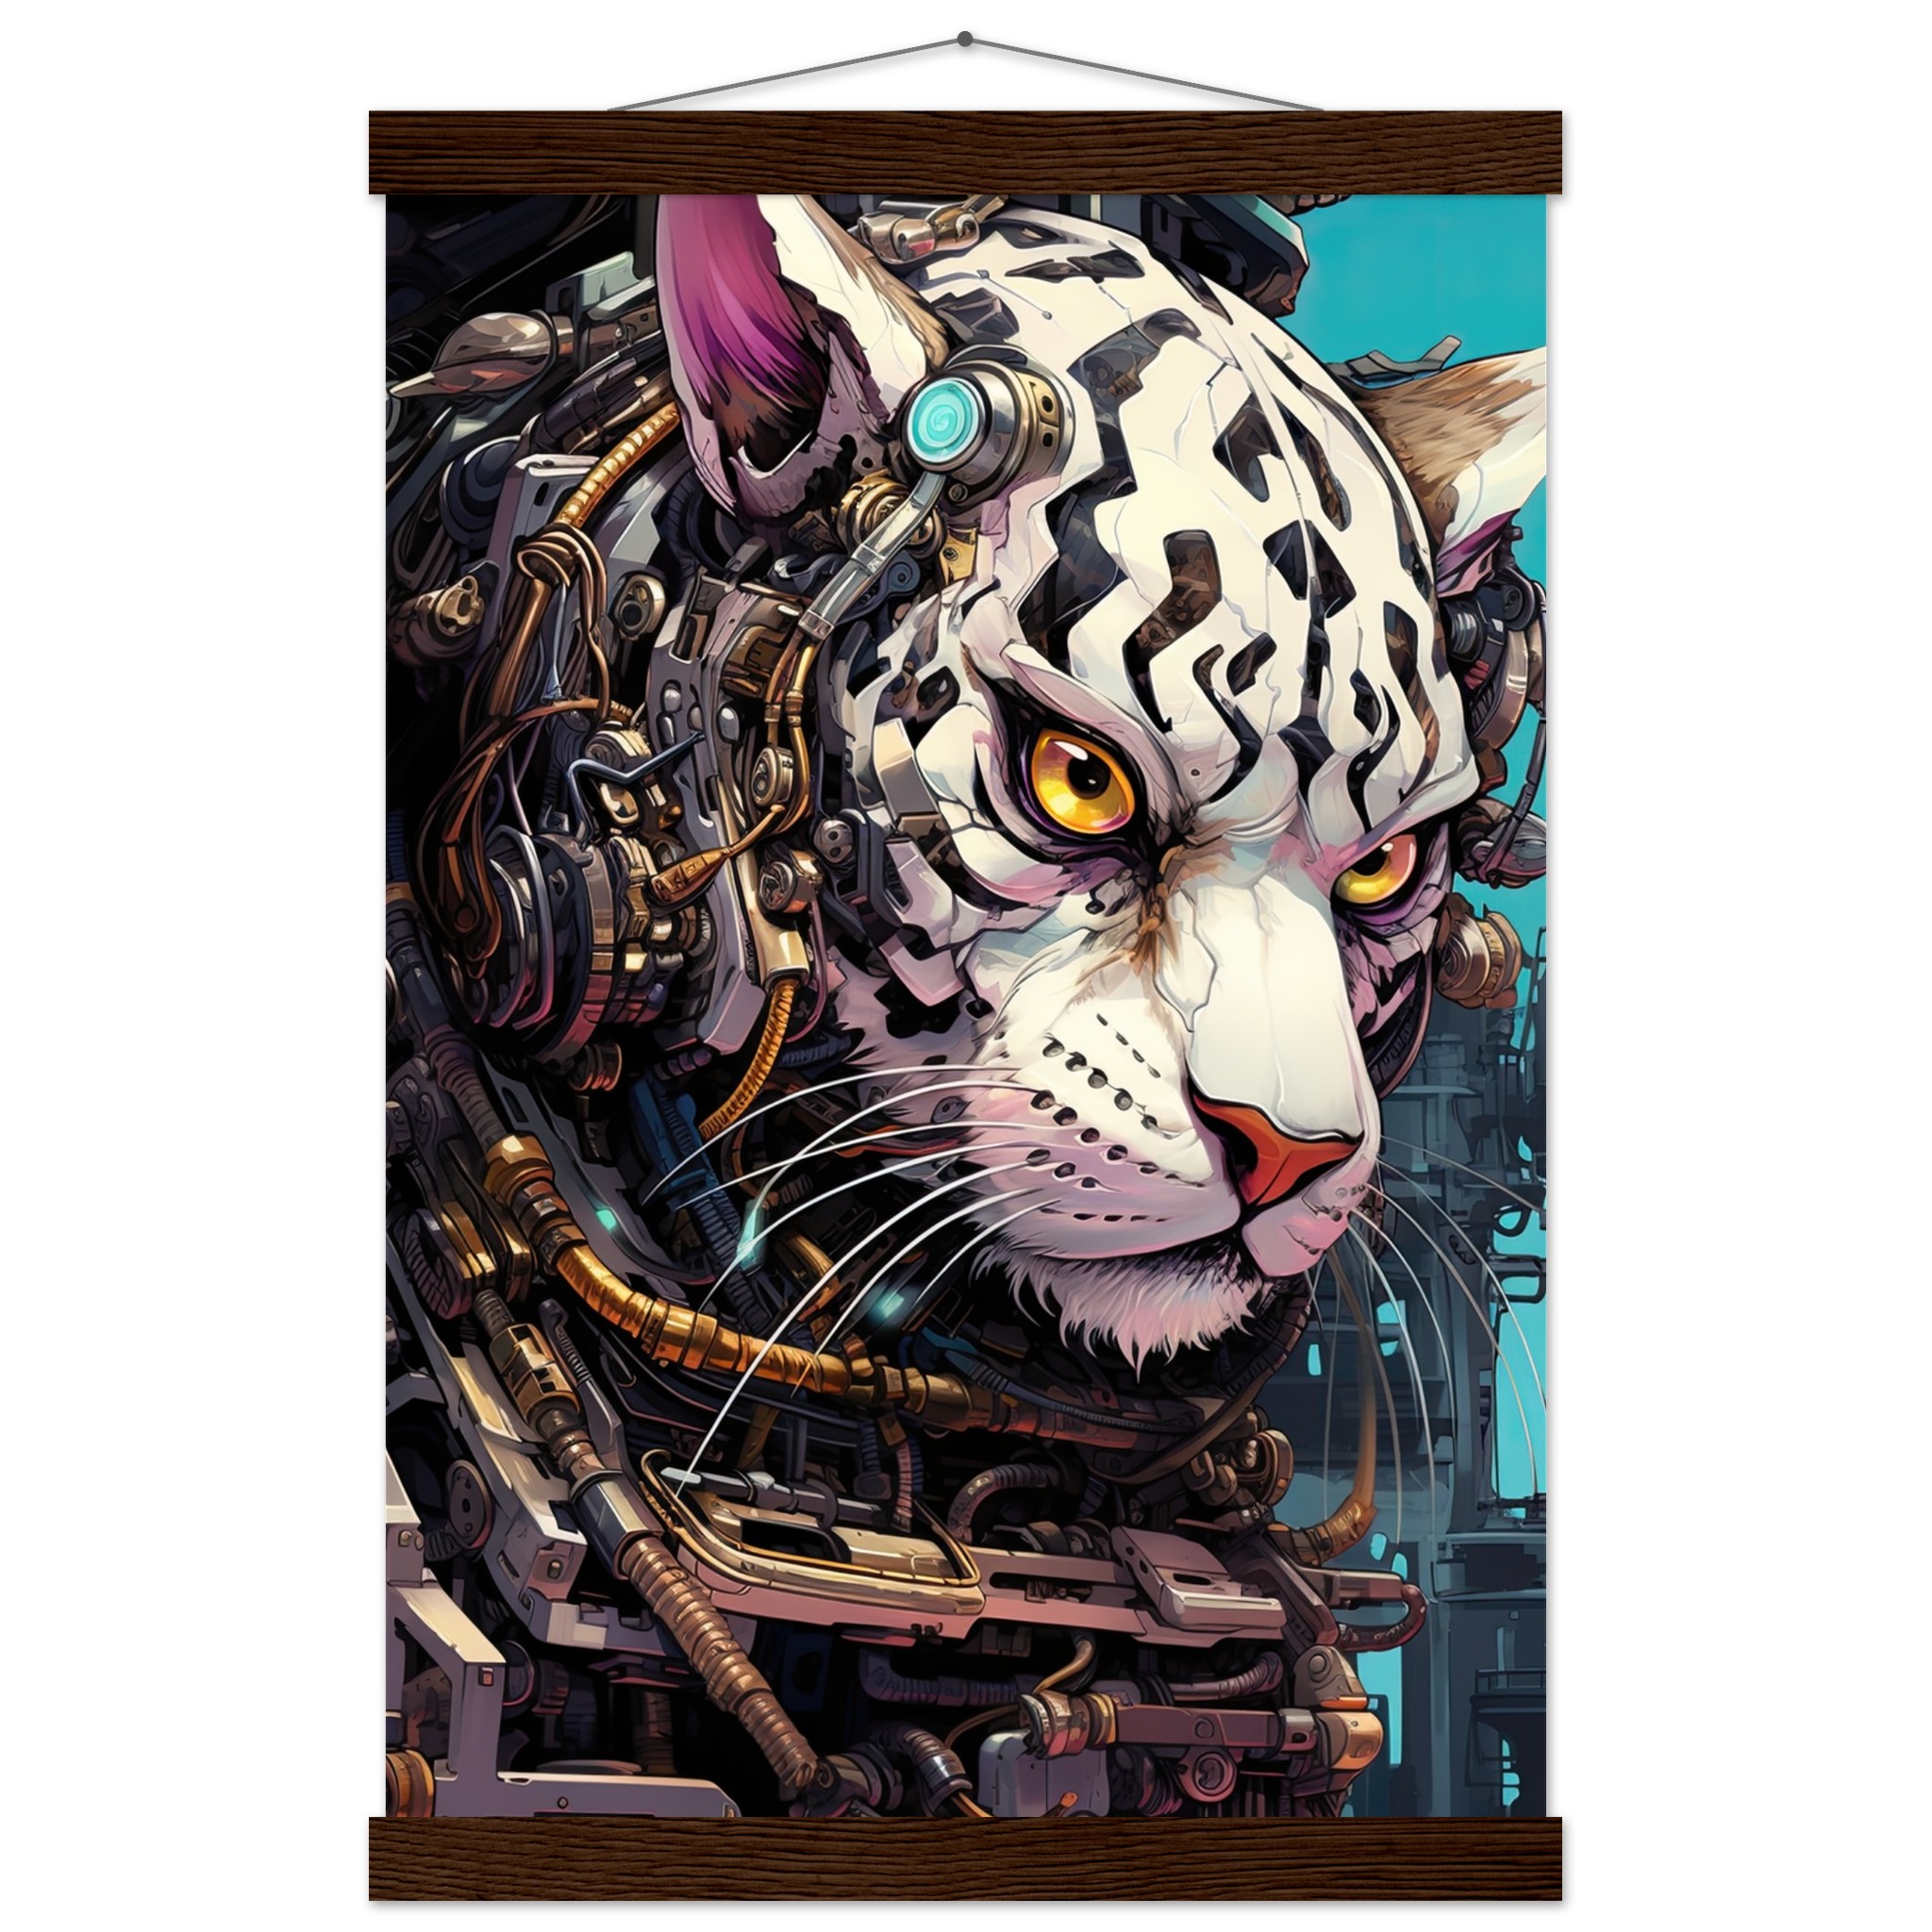 Cybernetic White Tiger Hanging Print – 30×45 cm / 12×18″, Dark wood wall hanger